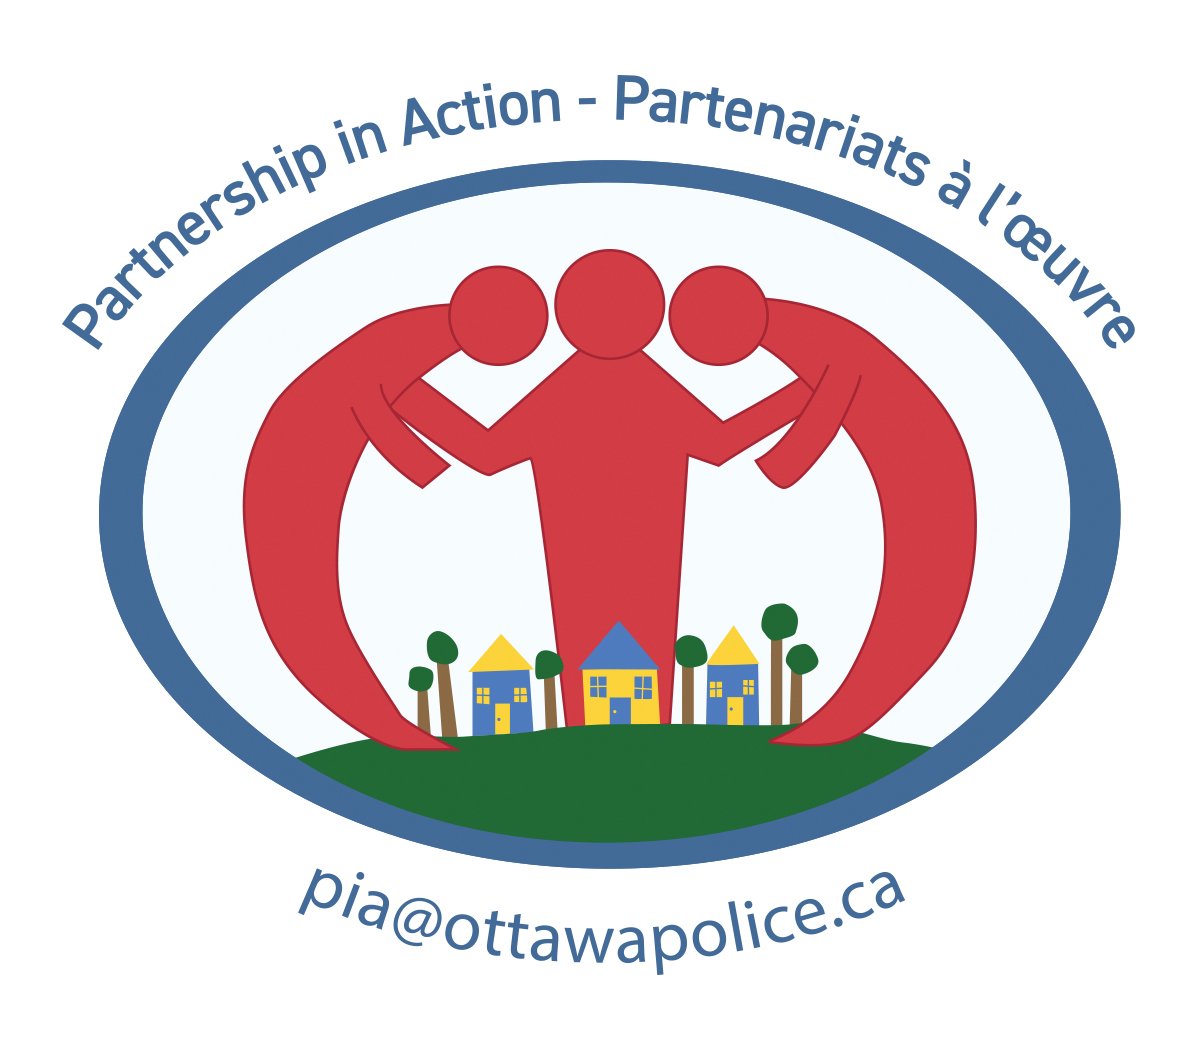 Partnership in Action logo